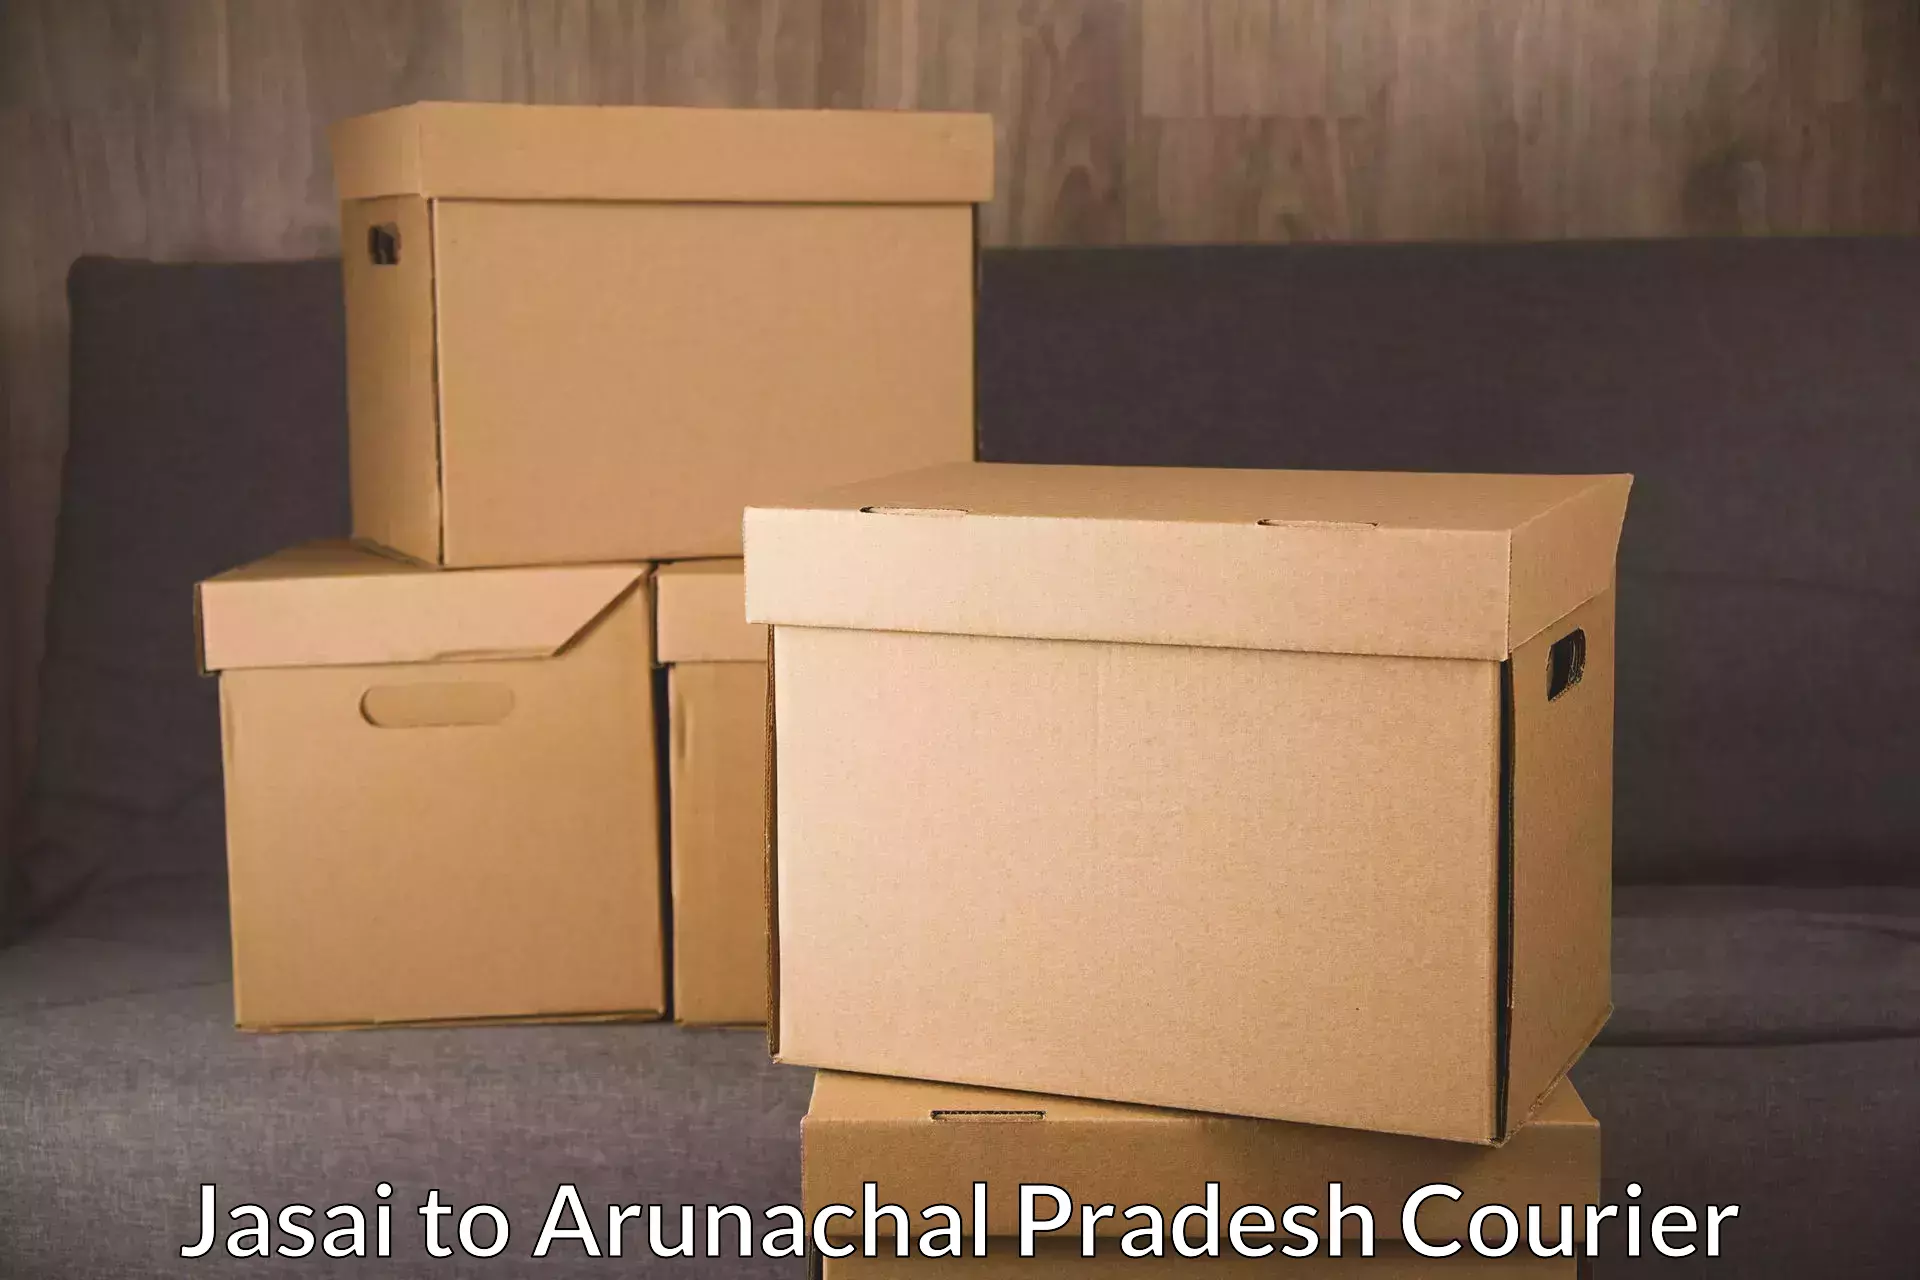 Express delivery capabilities Jasai to Arunachal Pradesh